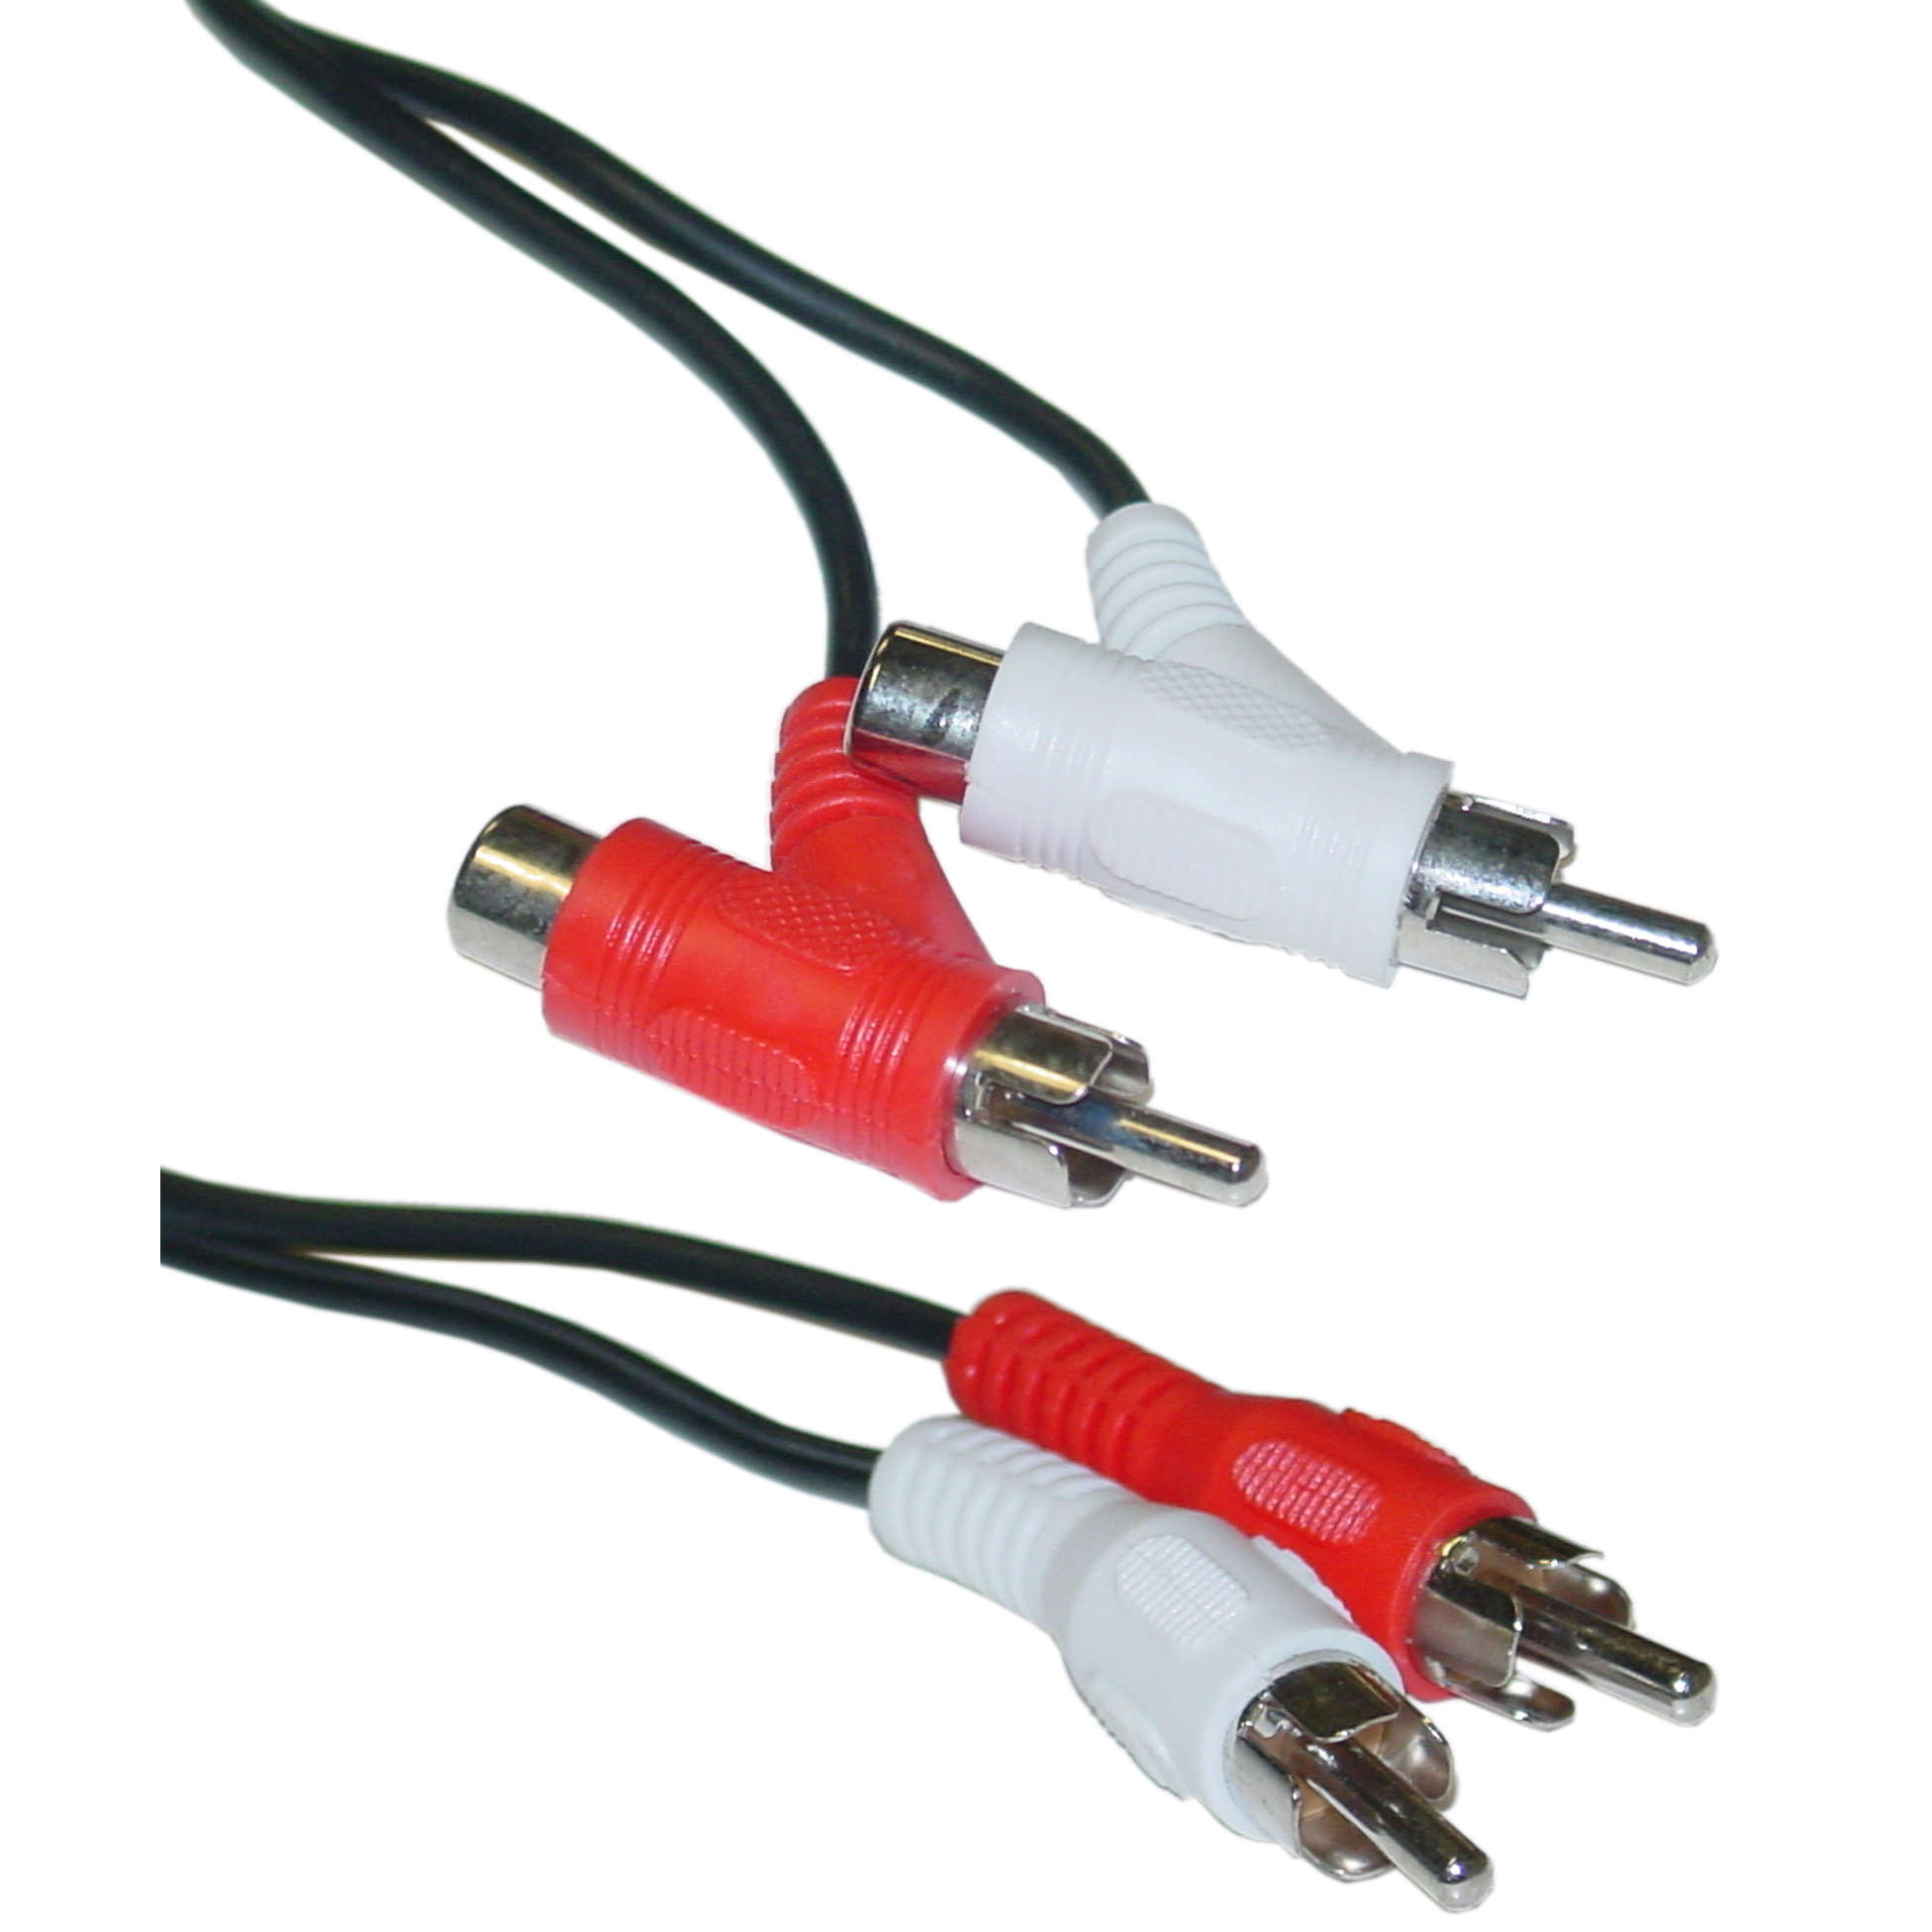 TENINYU 3 RCA Cable Splitter 3 RCA Female Jack to 6 RCA Male Plug Splitter Audio Video Av Adapter Cable 12inch 